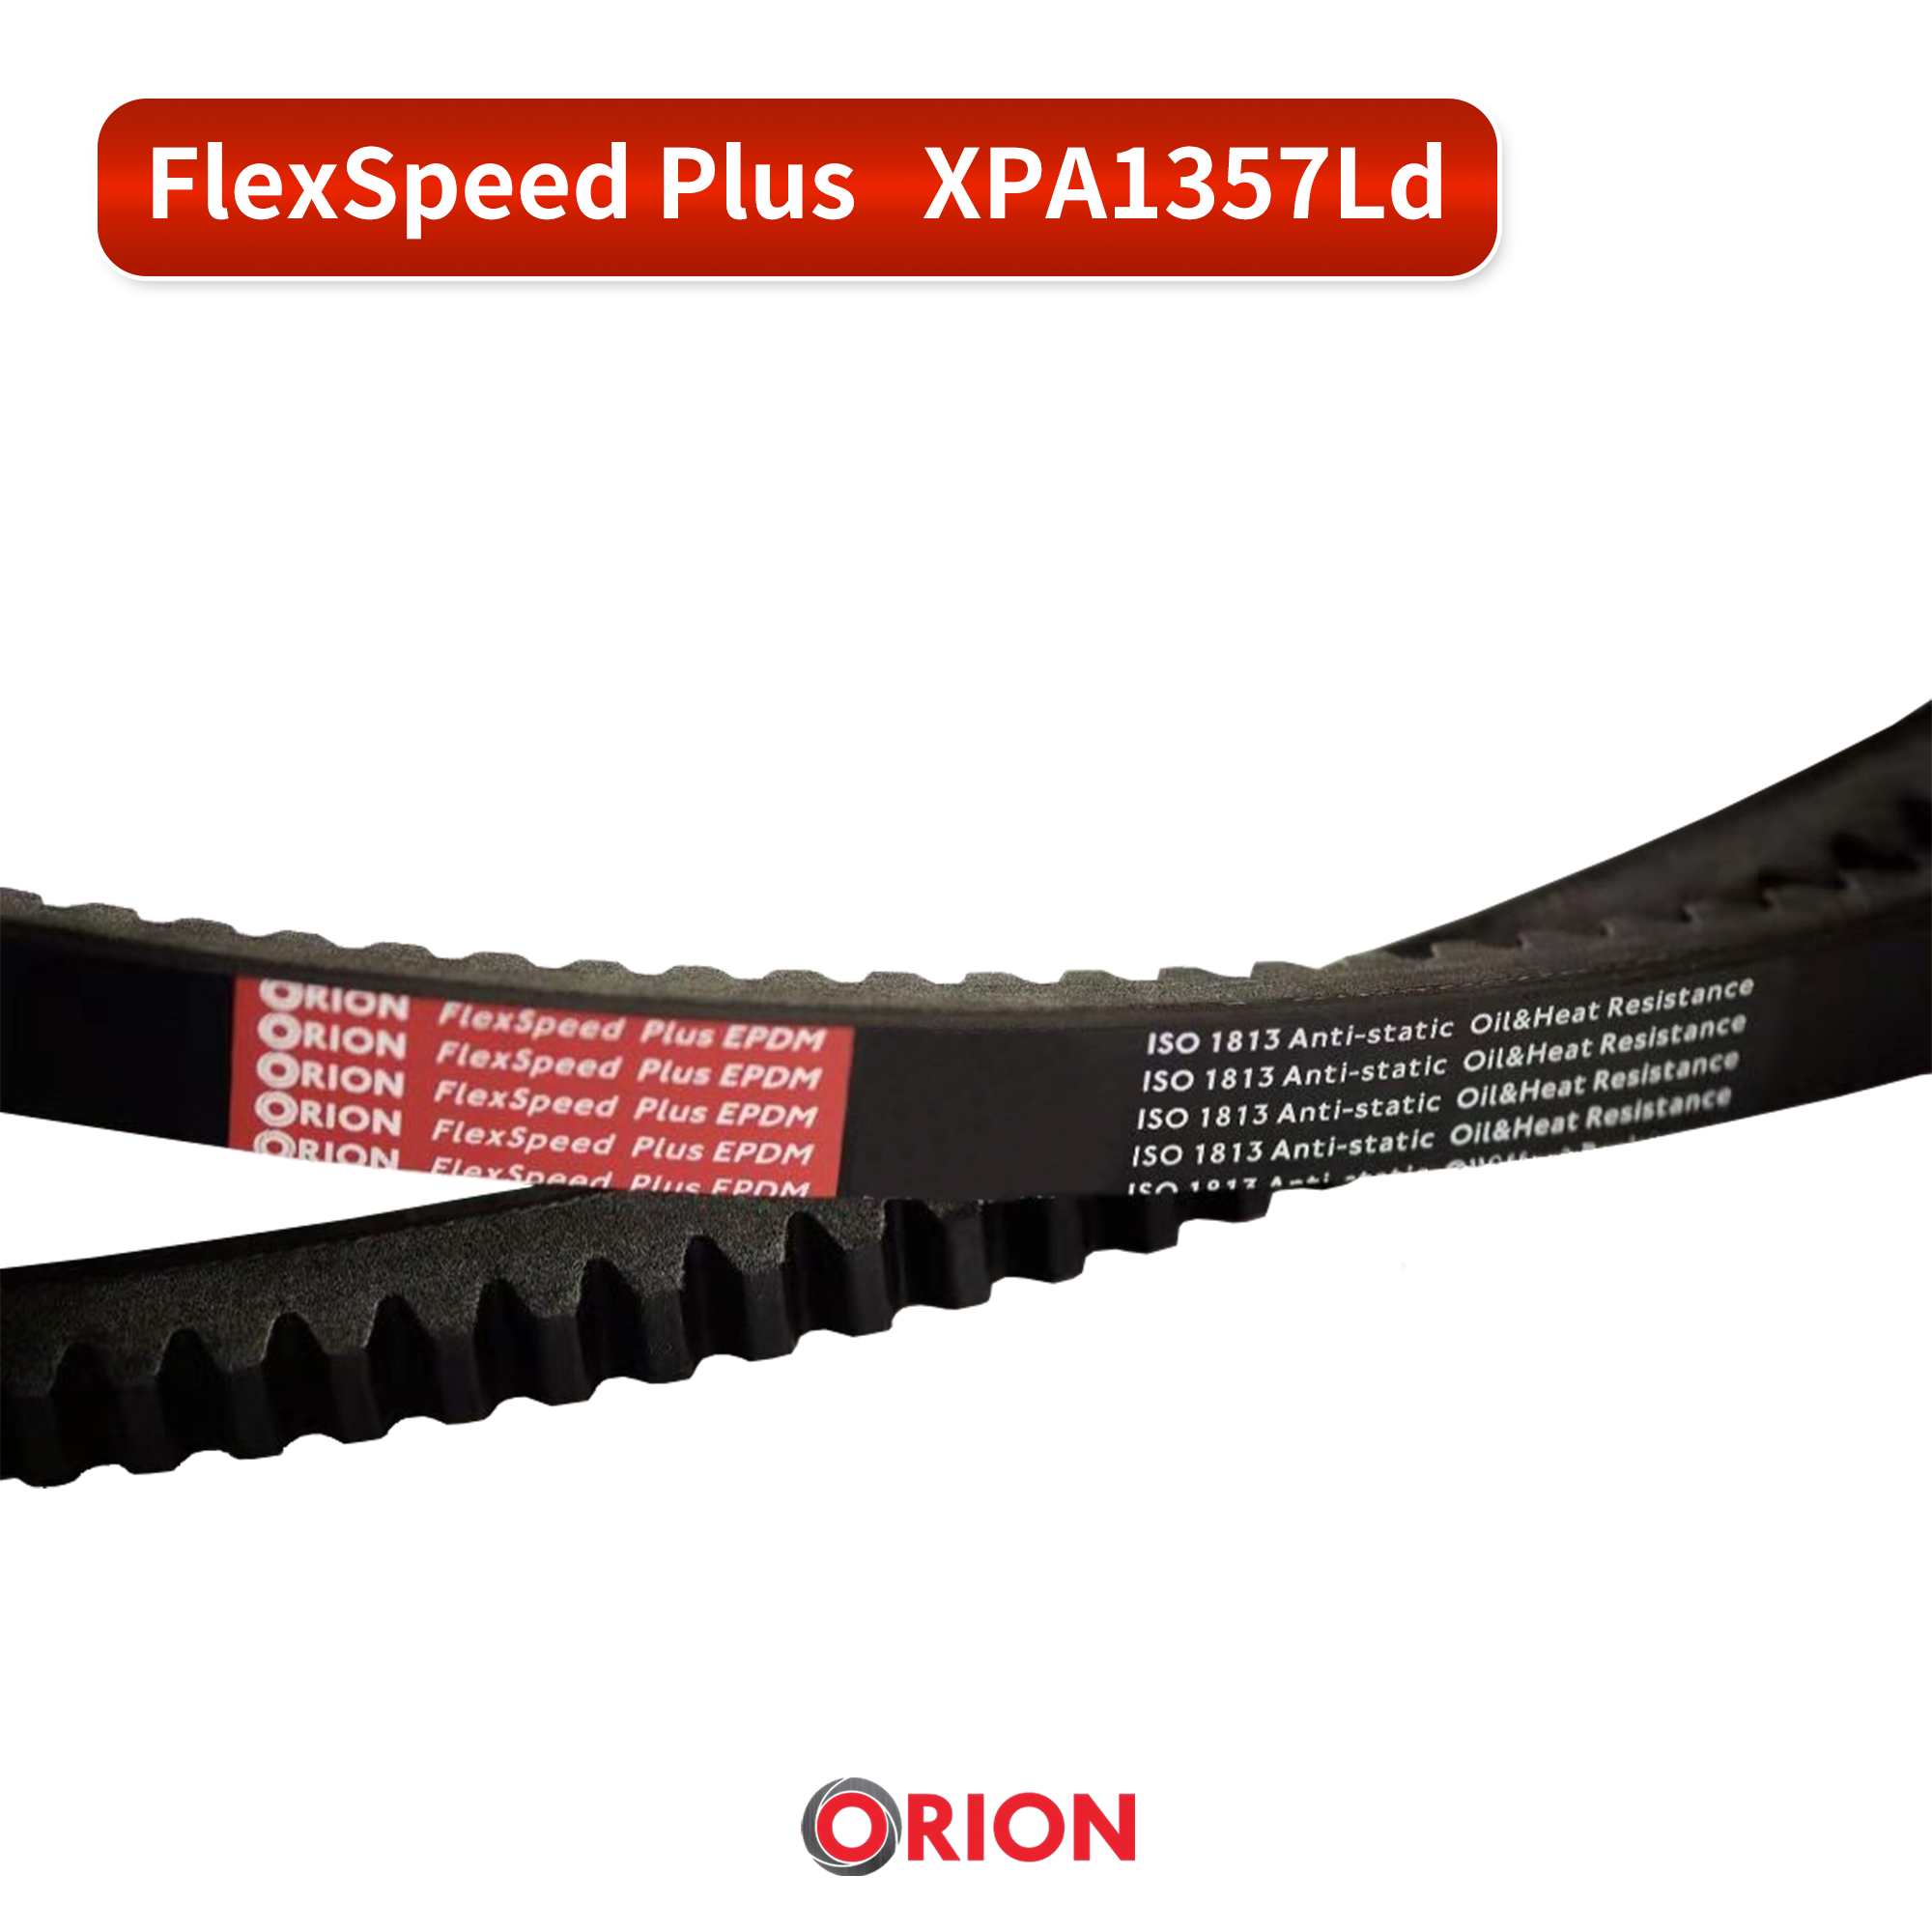 ORION FlexSpeed Plus XPA1357 Ld （红标）